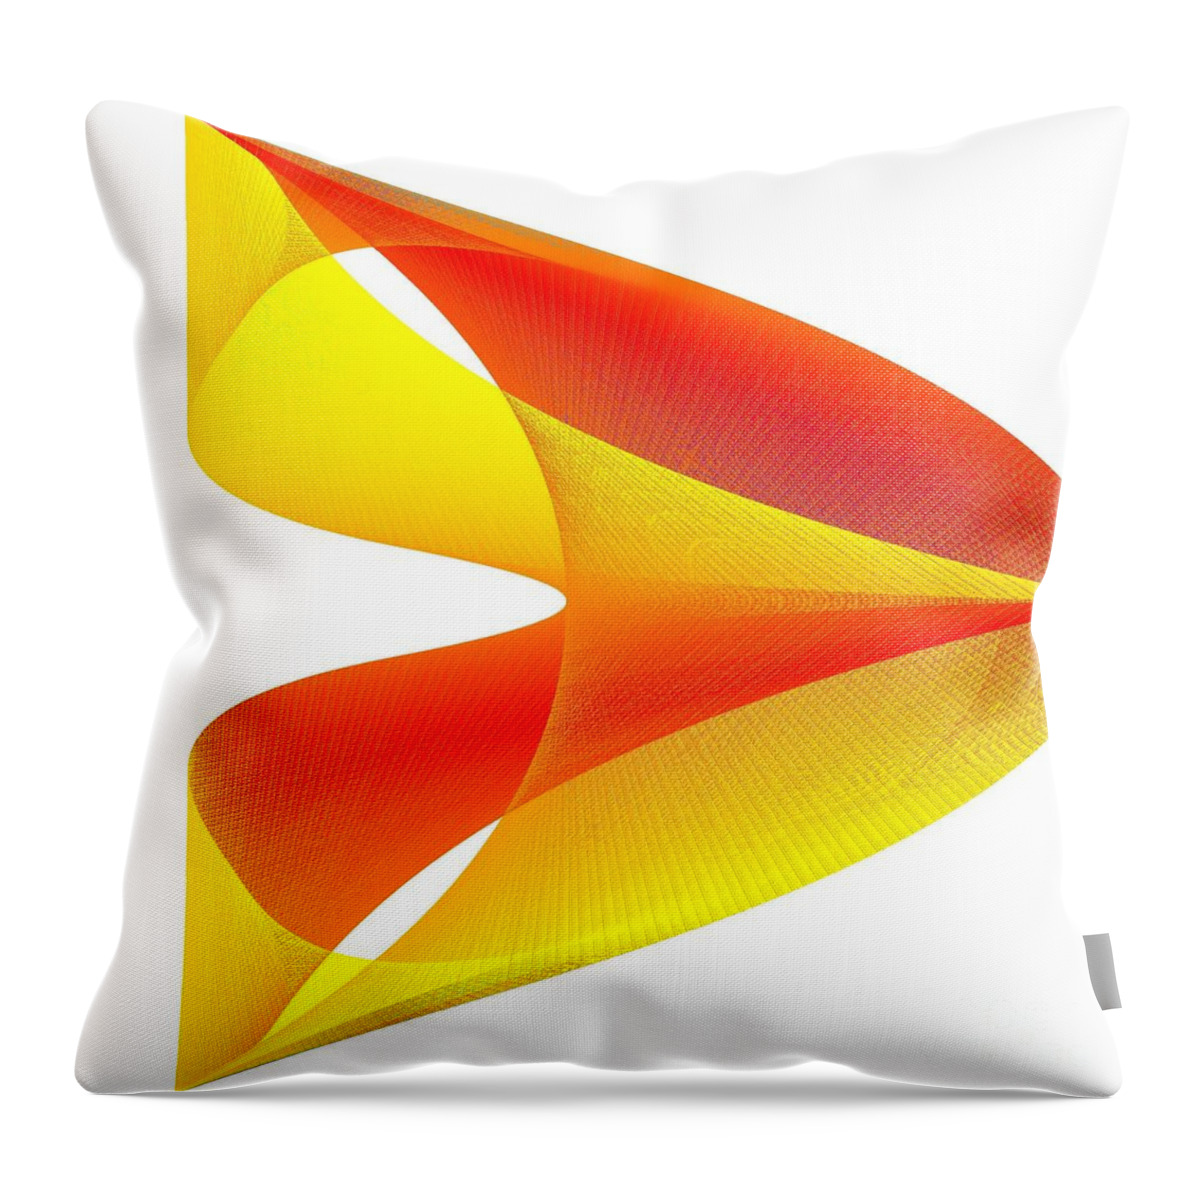 Cusp Throw Pillow featuring the digital art Cusp by Michael Skinner